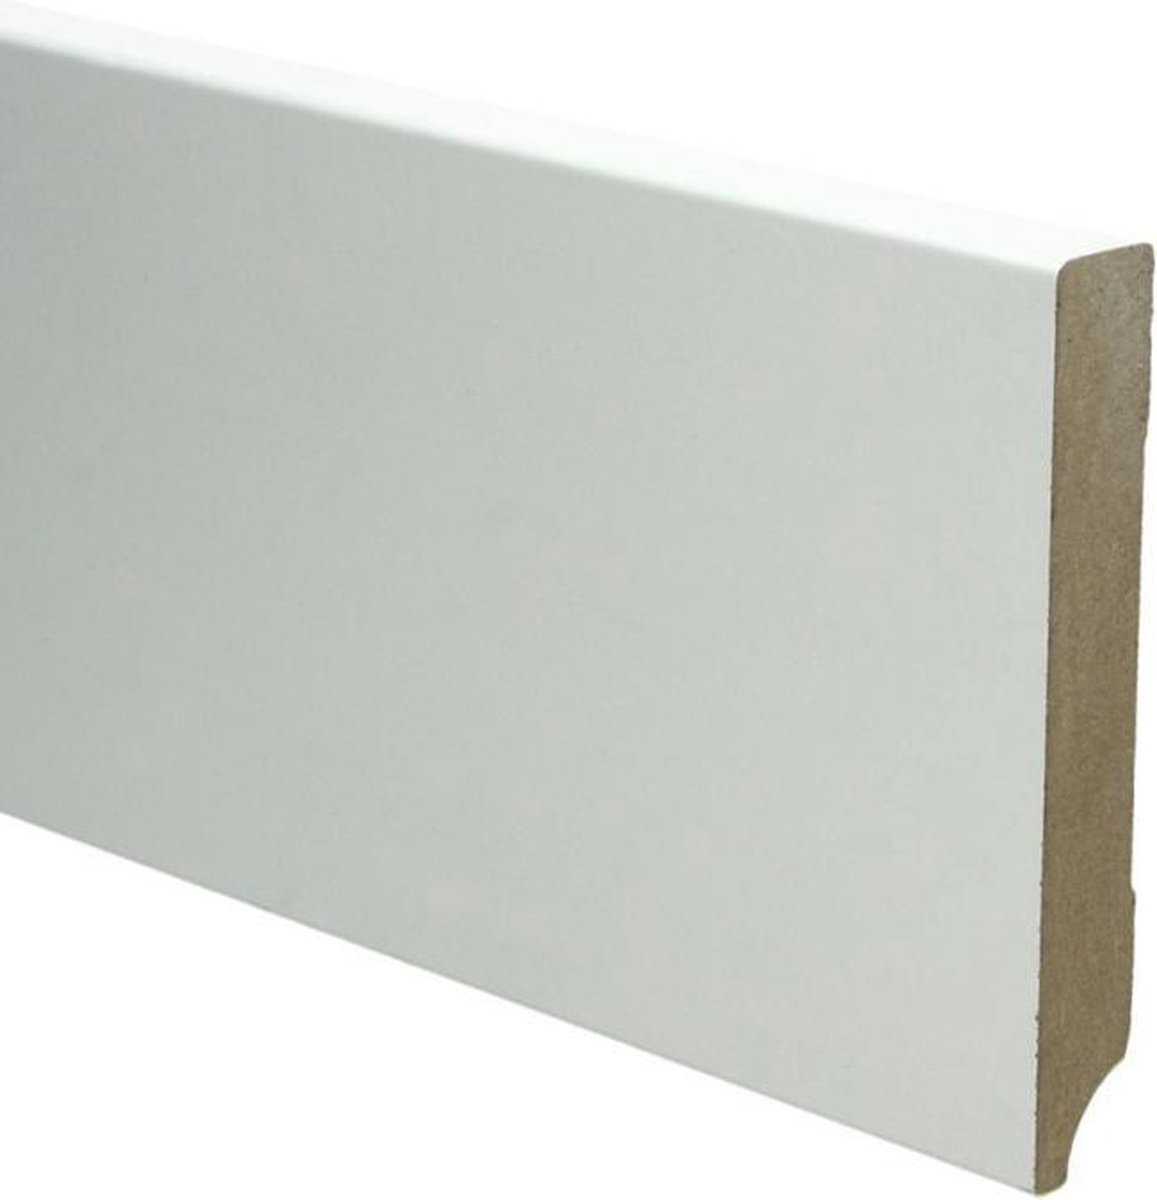 Hoge plinten - MDF - Moderne plint 120x18 mm - Wit - Voorgelakt - RAL 9010 - Per 5 stuks 2,4m